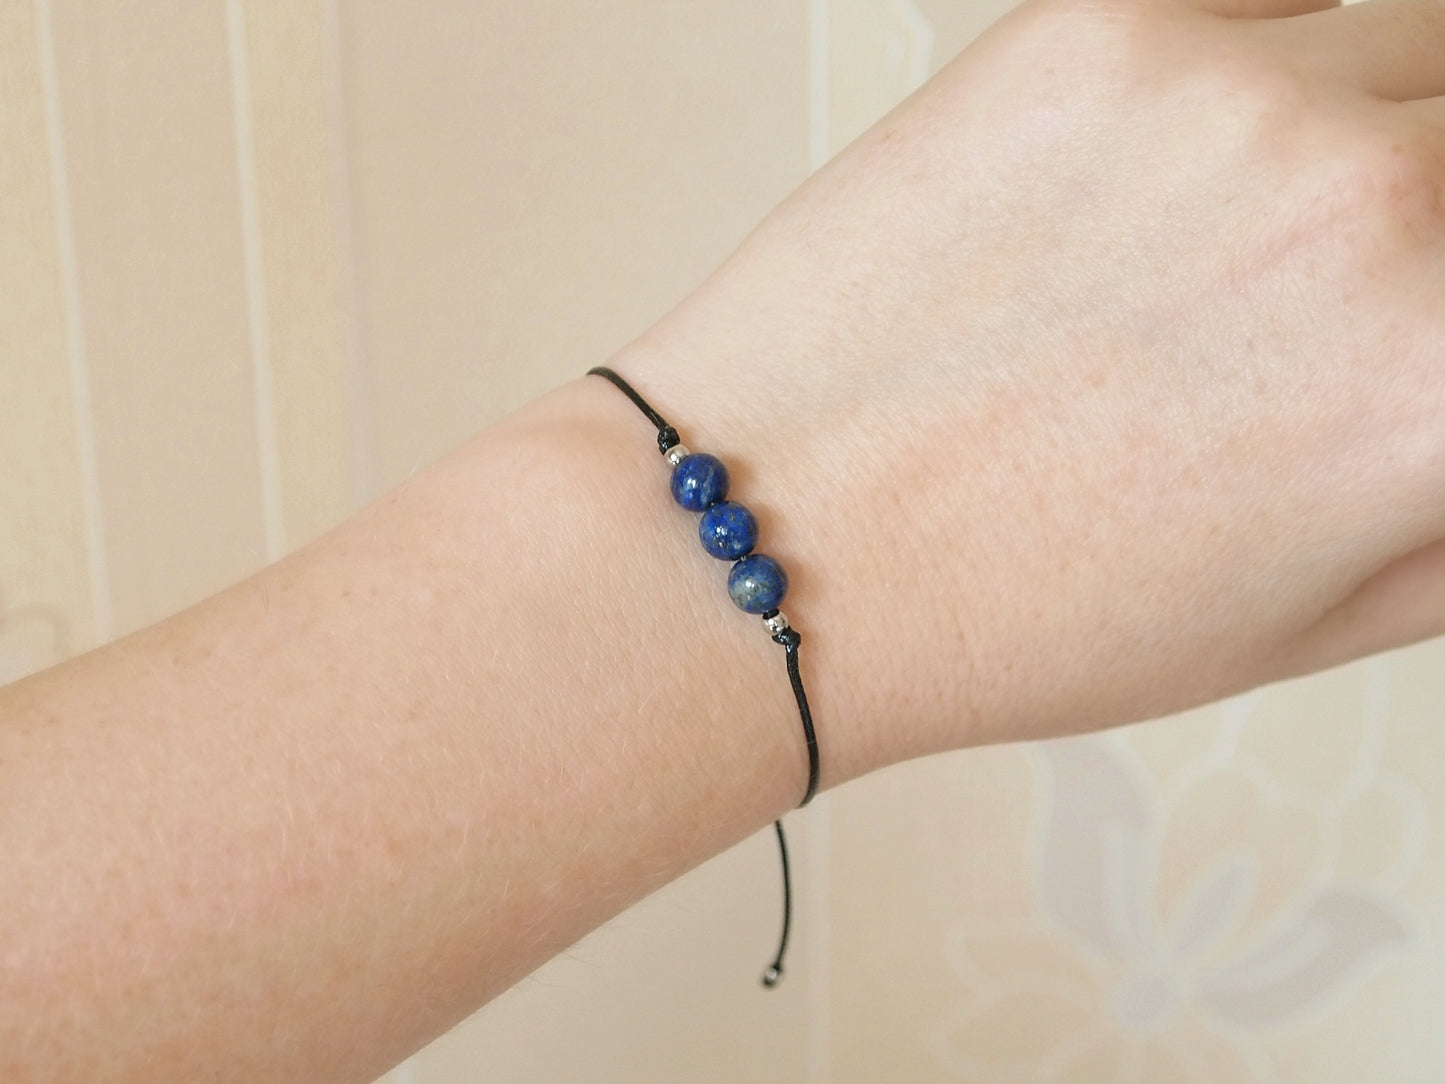 third eye chakra gemstones, healing bracelet